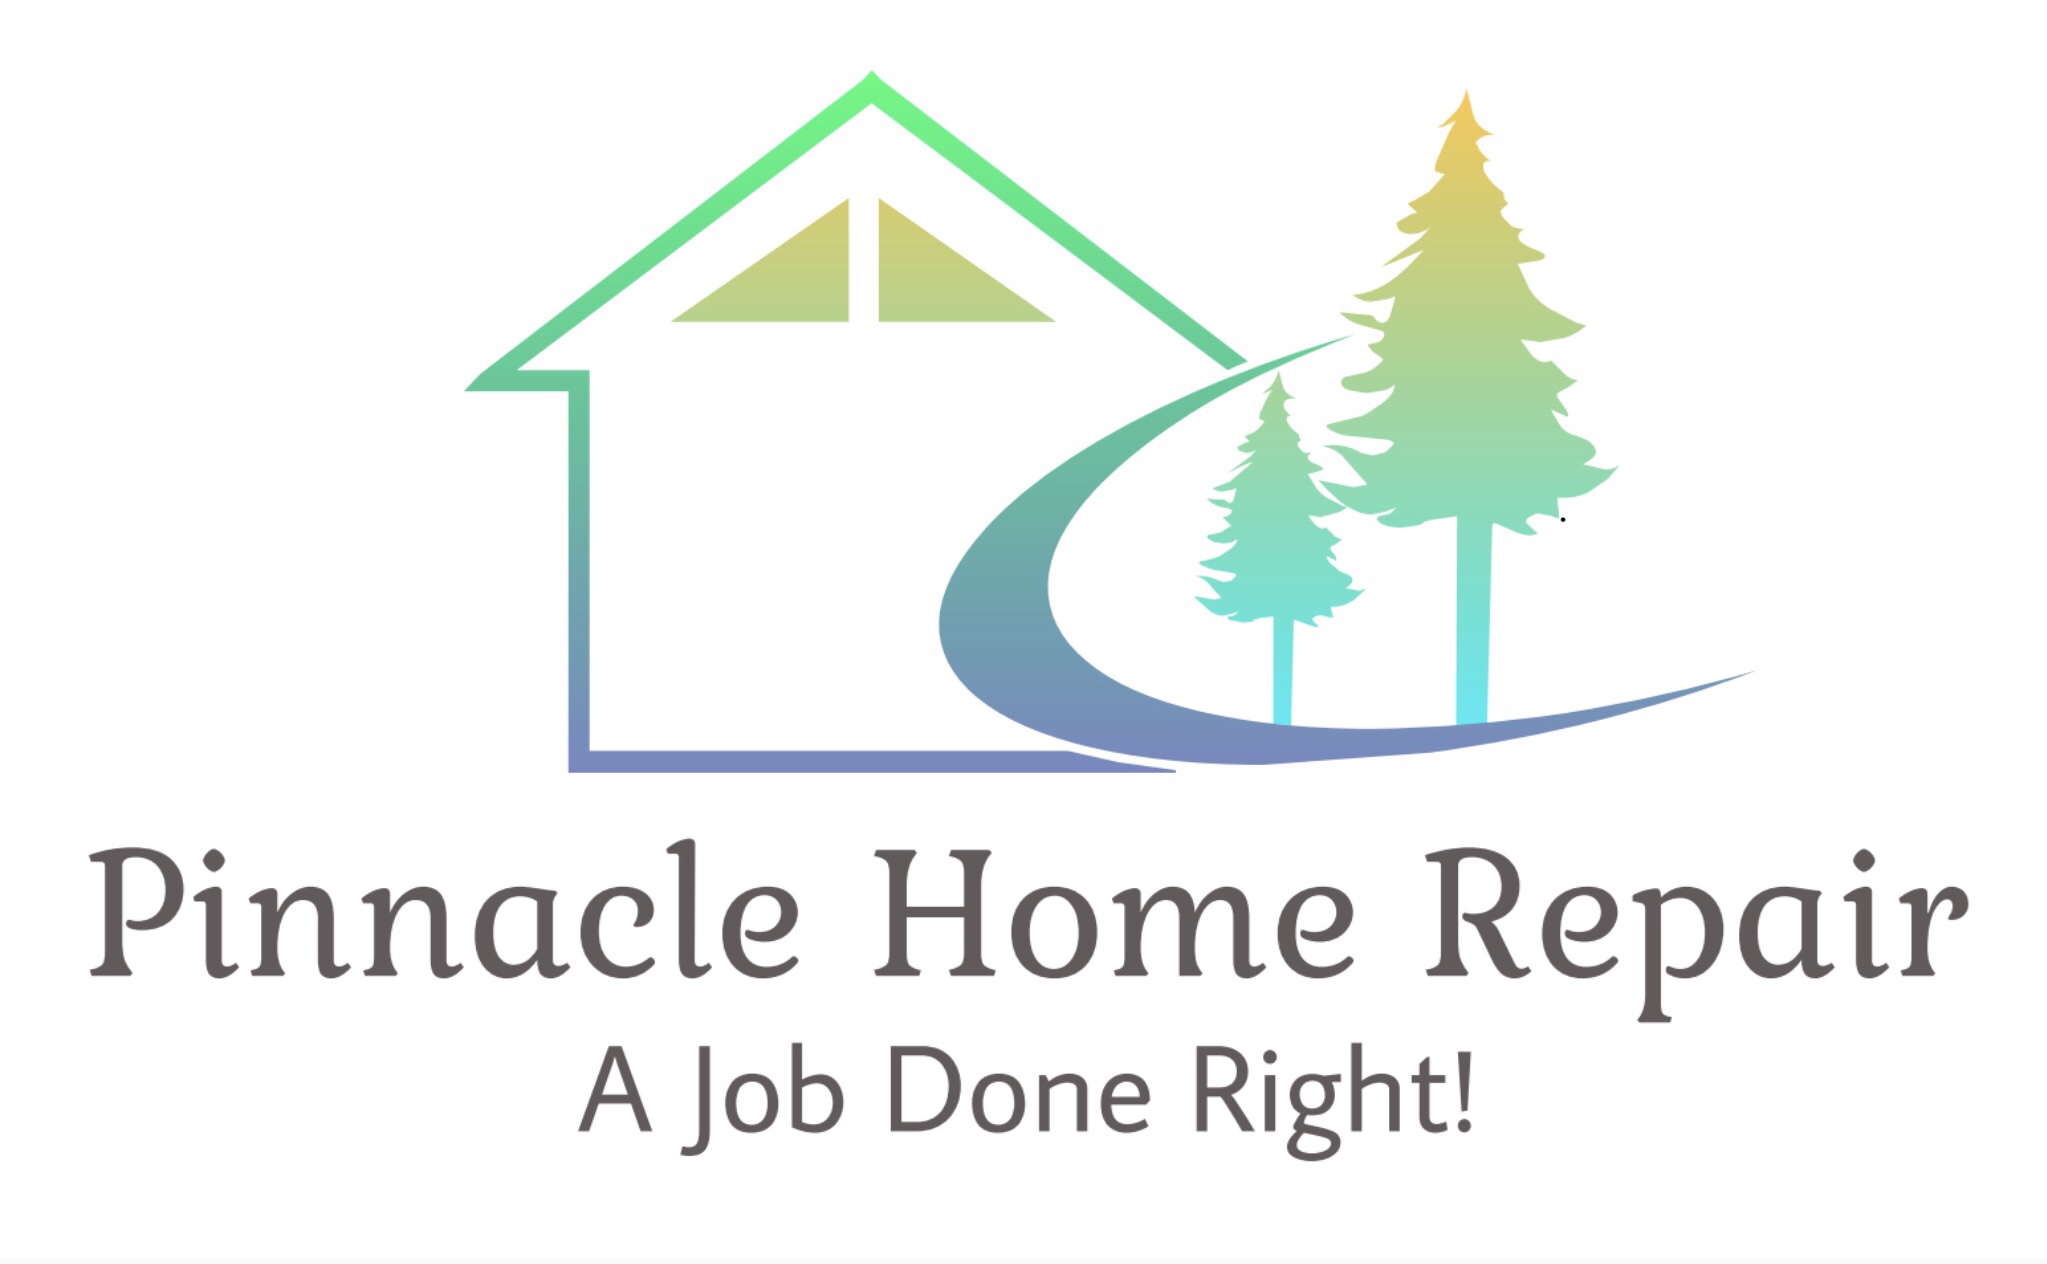 Pinnacle Home Repair Company Logo